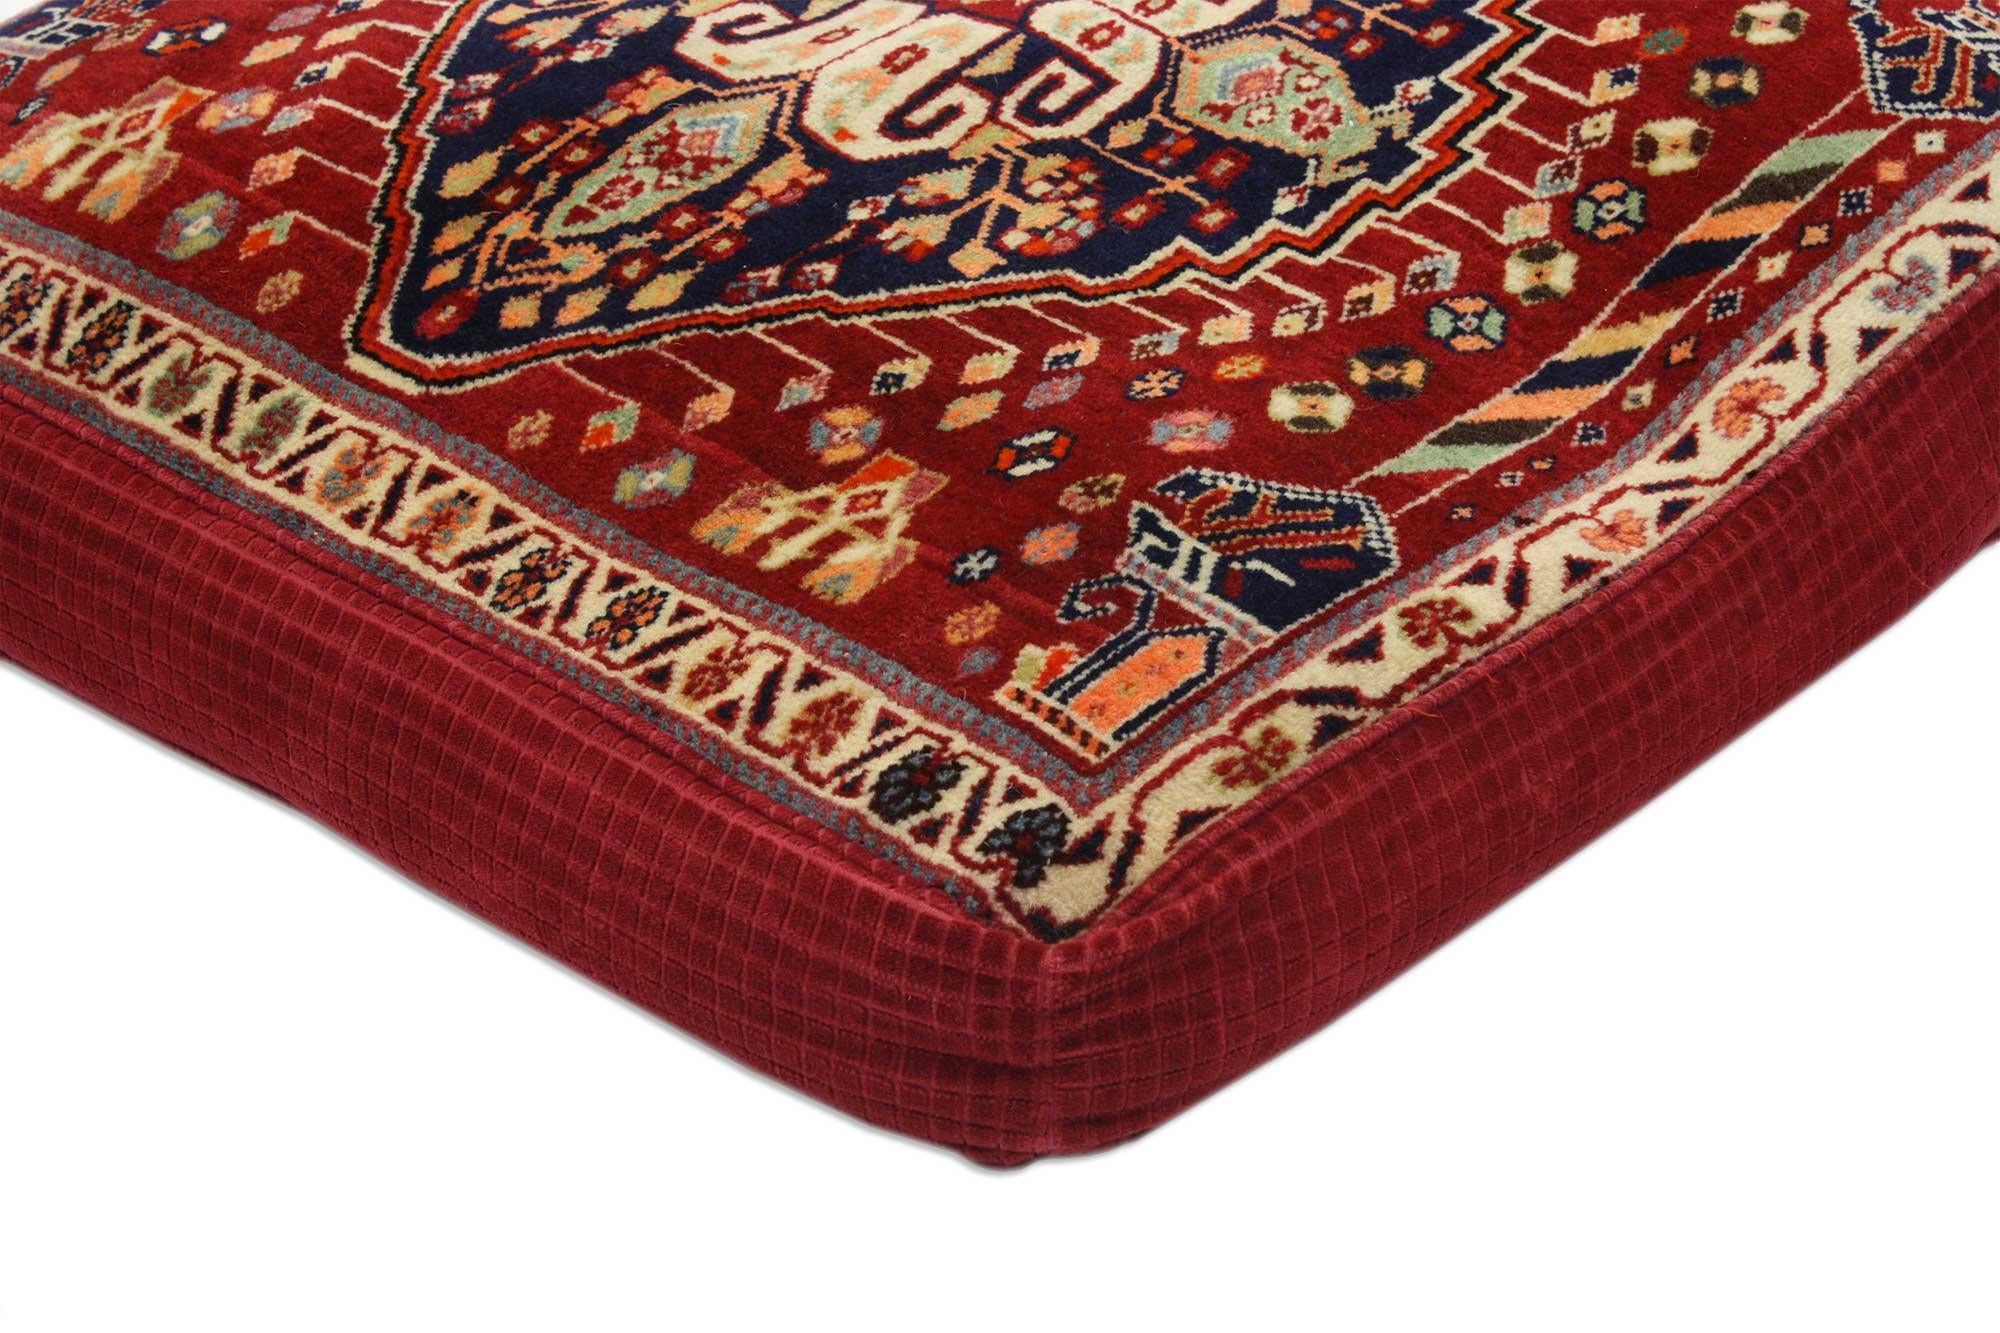 Pair of Antique Persian Floor Cushions Poshti Pillows For Sale 2